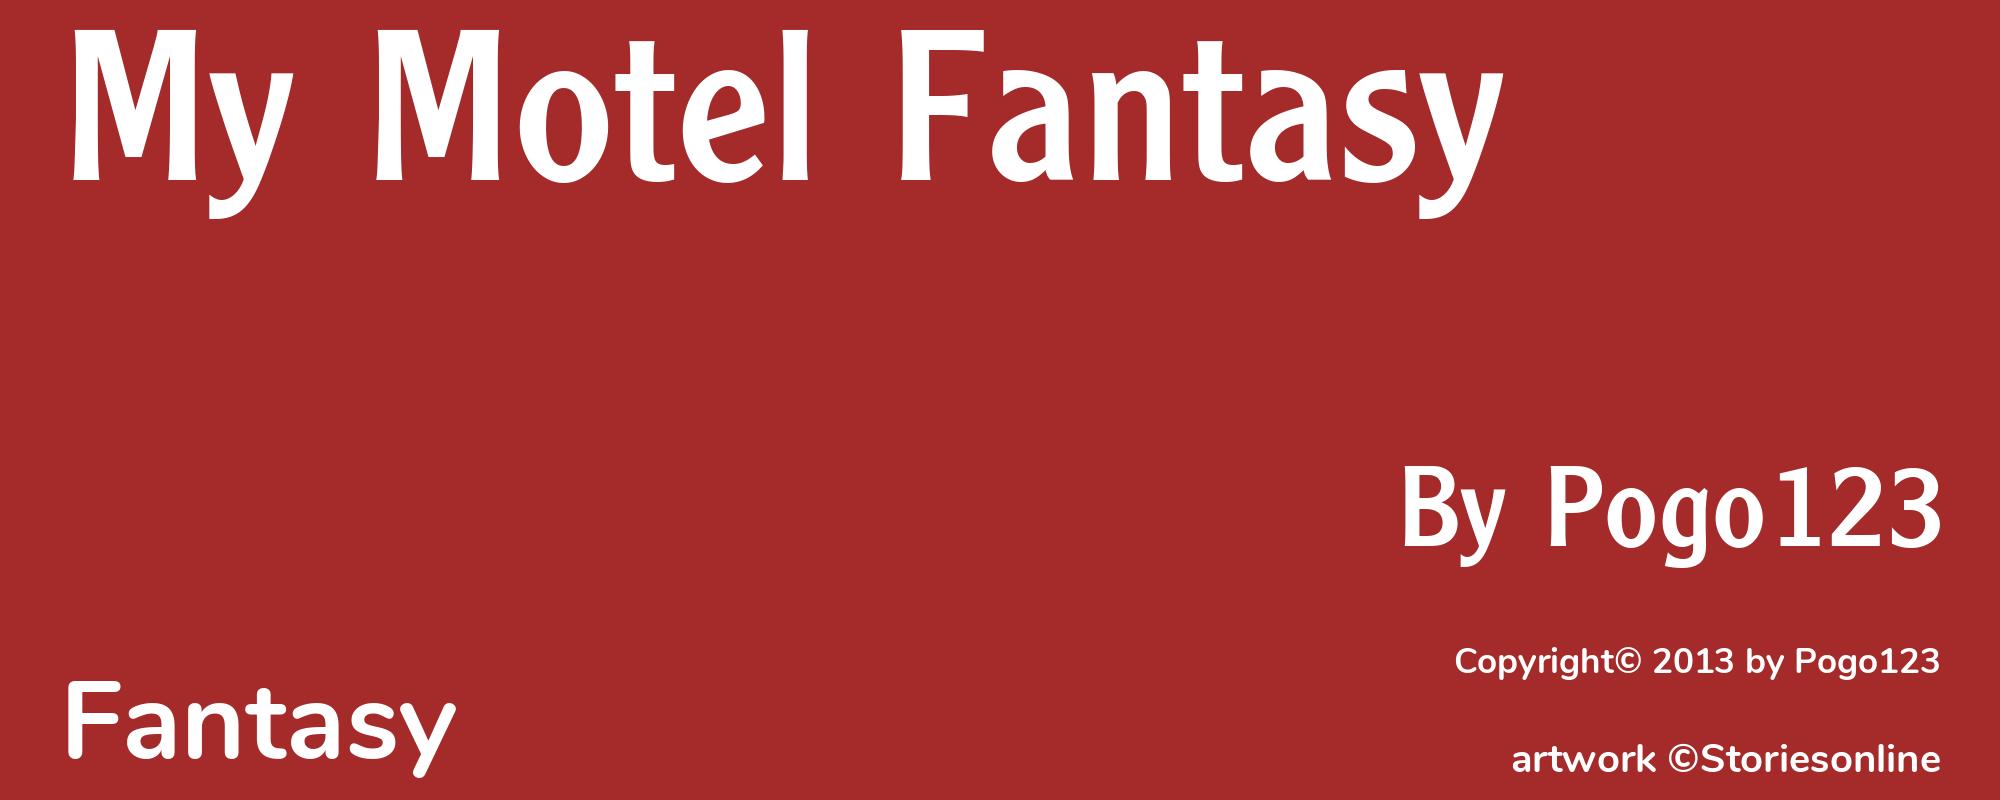 My Motel Fantasy - Cover